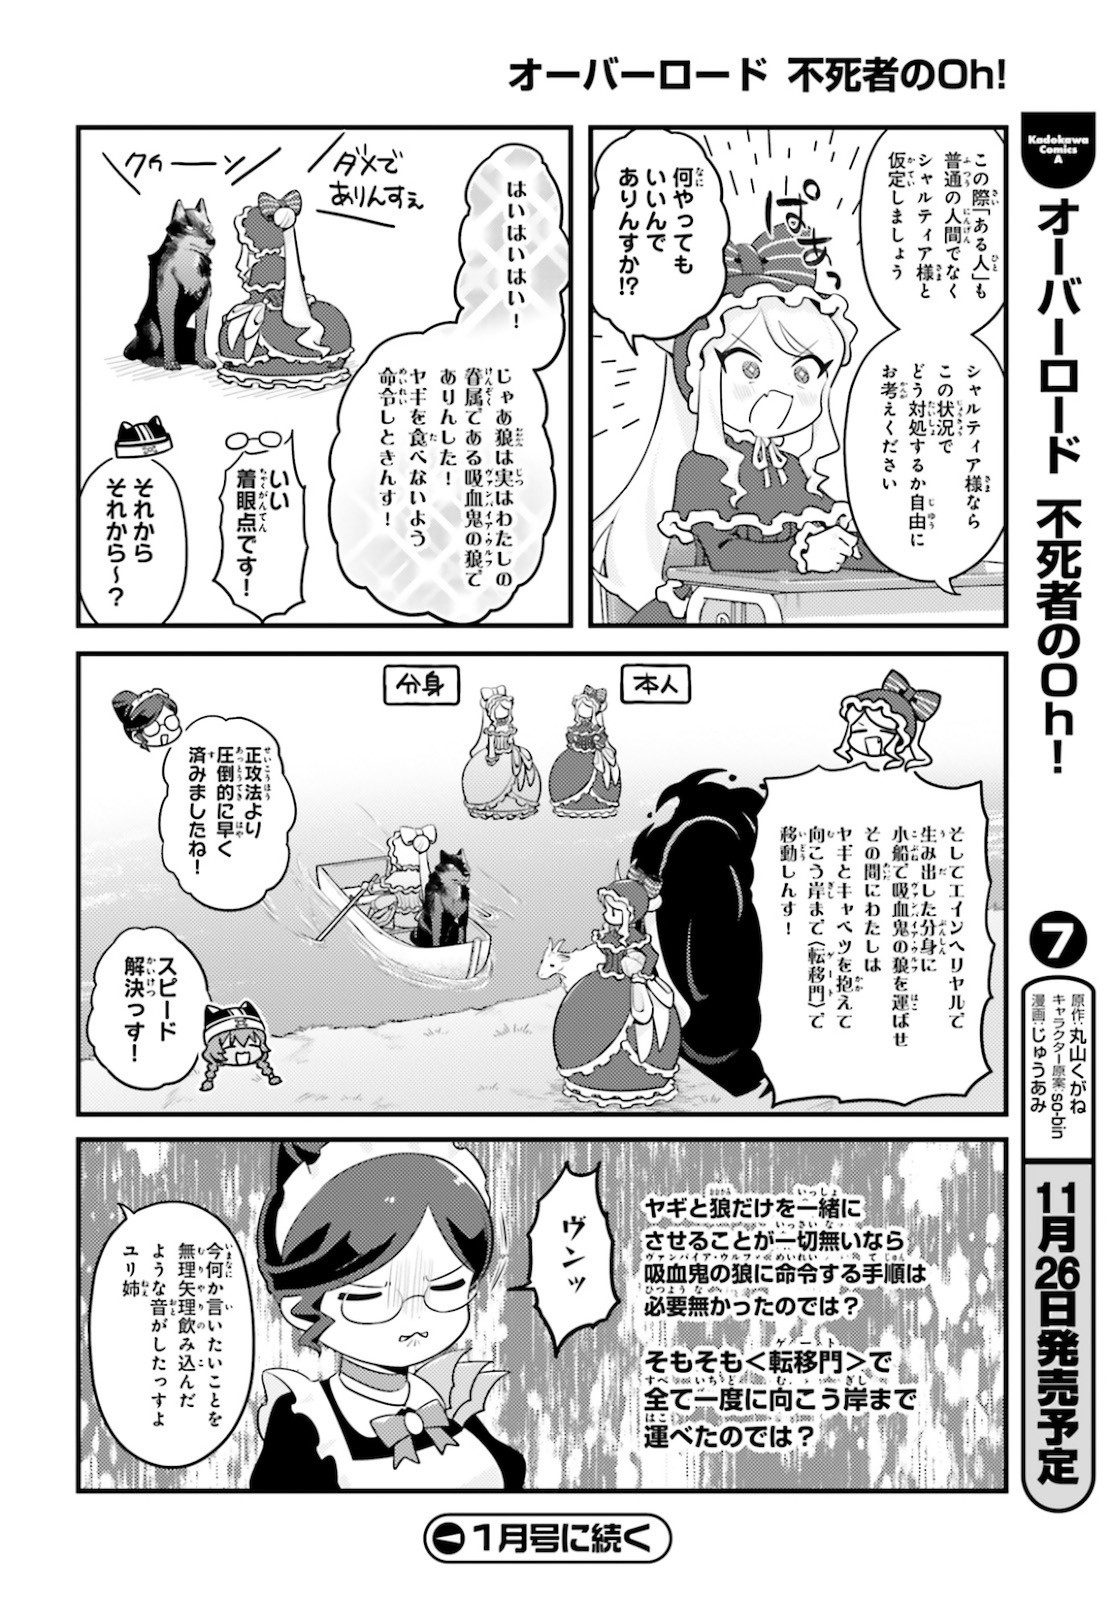 Overlord-Fushisha-no-Oh - Chapter 43 - Page 20